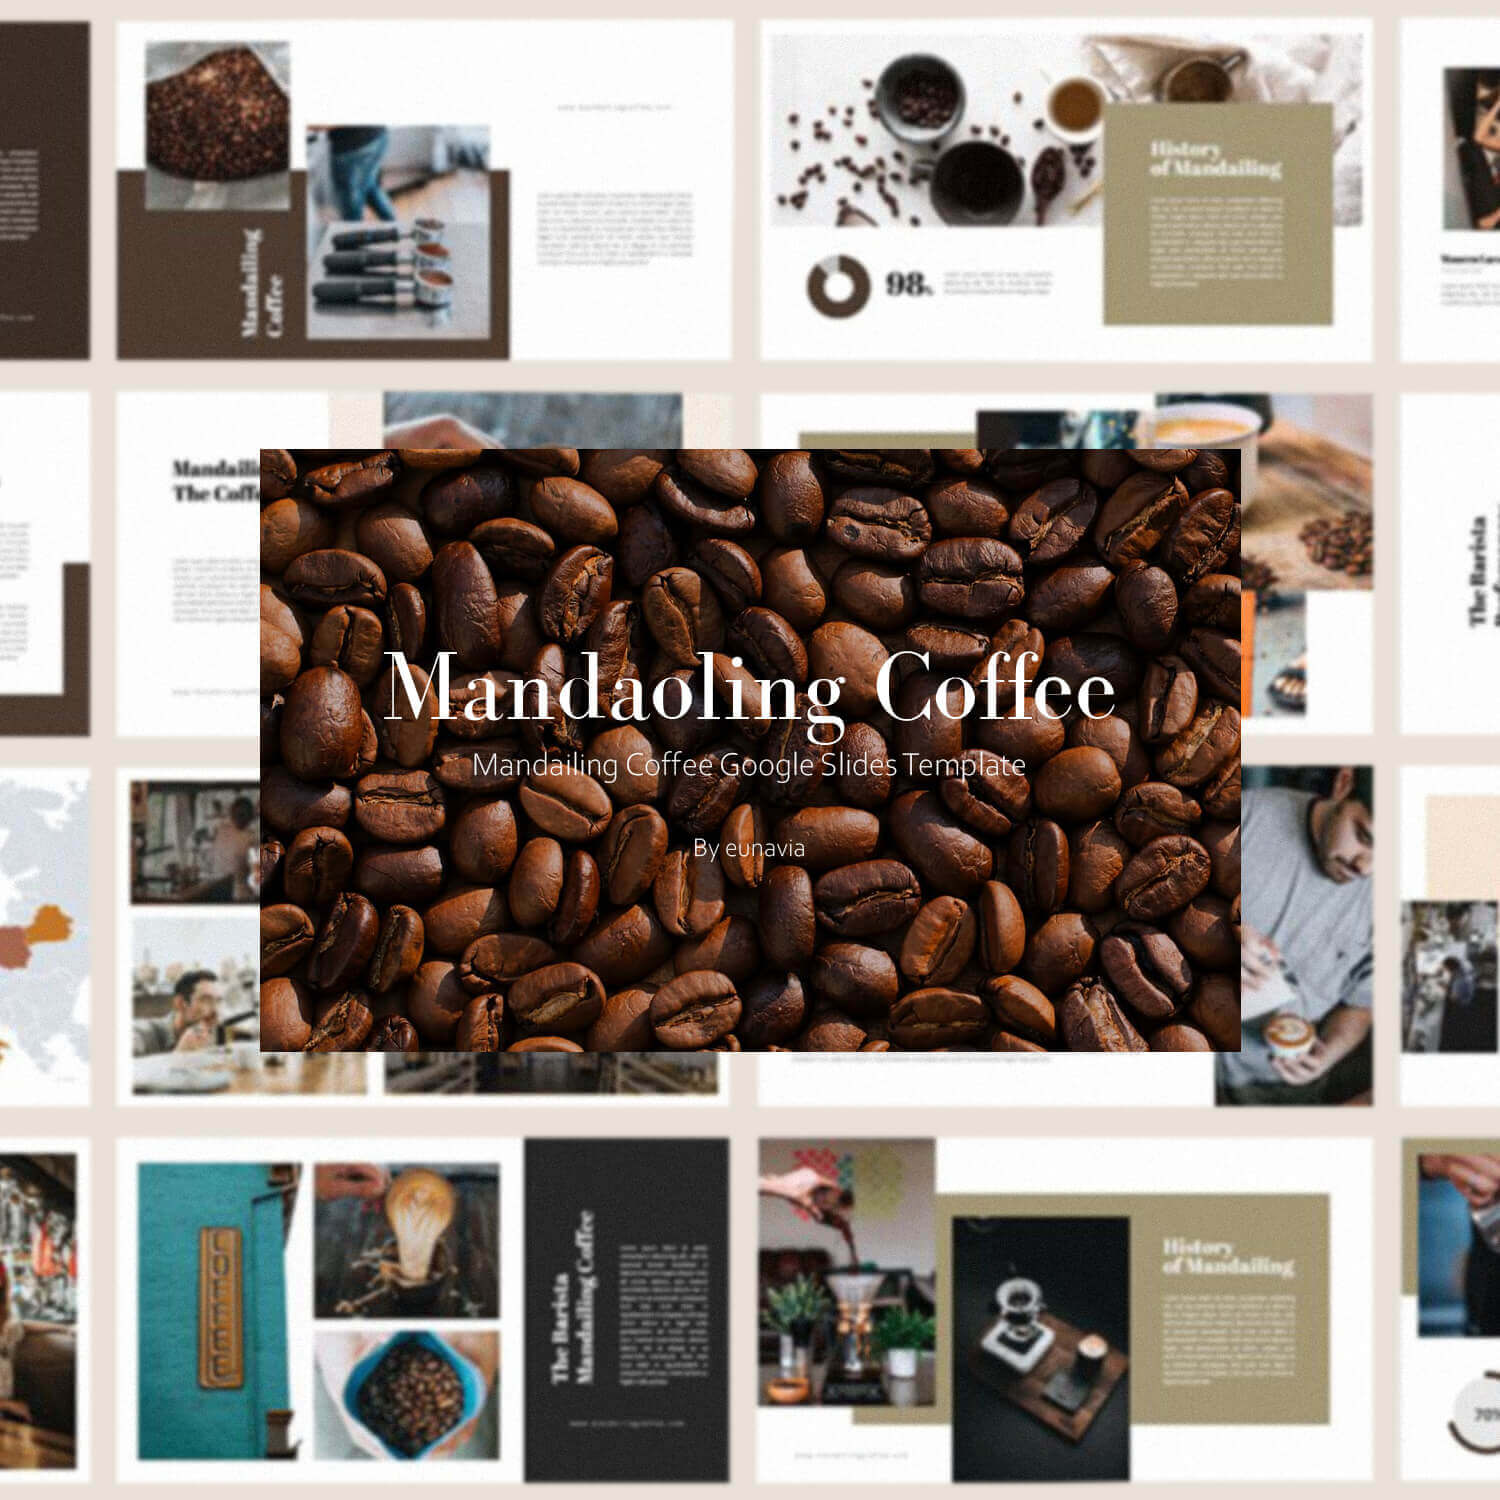 Mandailing Coffee Google Slides by Eunavia.